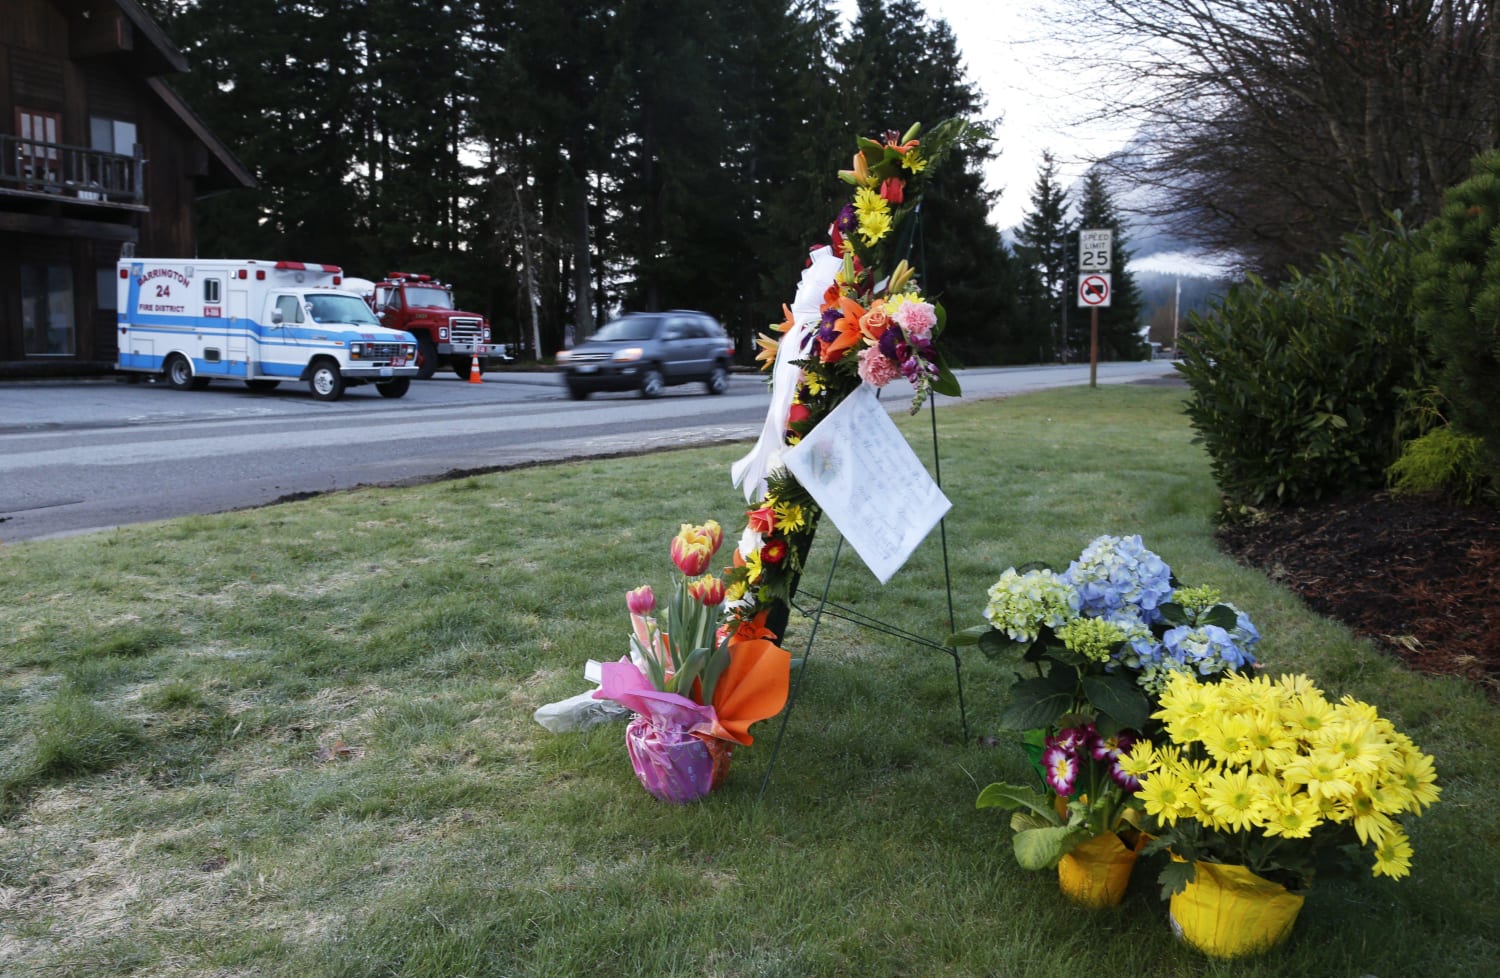 Funeral Home Near Washington Mudslide Copes with Burying More Dead - NBC News4806 x 3132